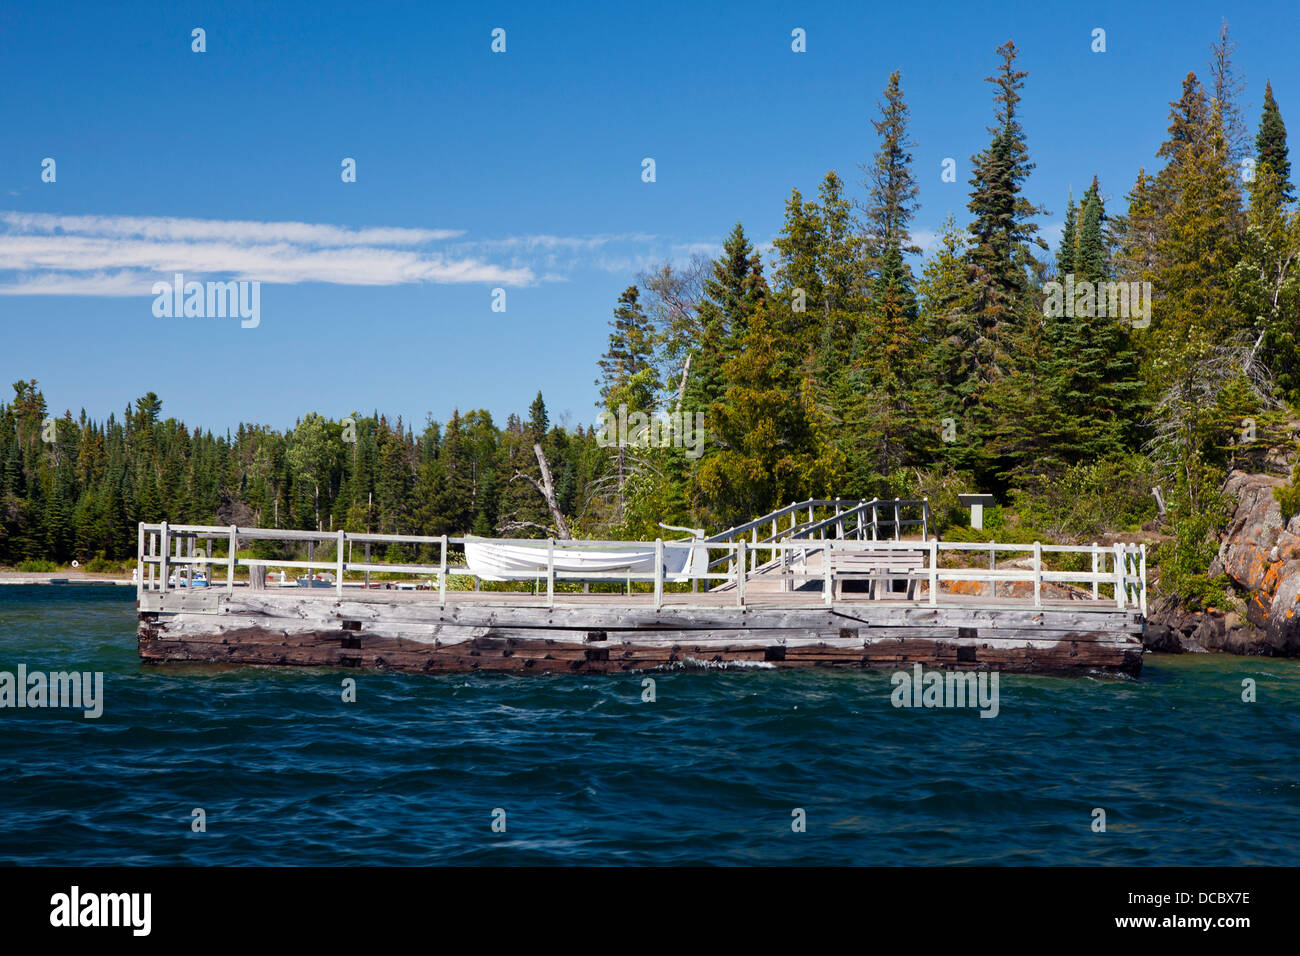 America Dock, Rock Harbor, Isle Royale National Park, Michigan, United States of America Stock Photo